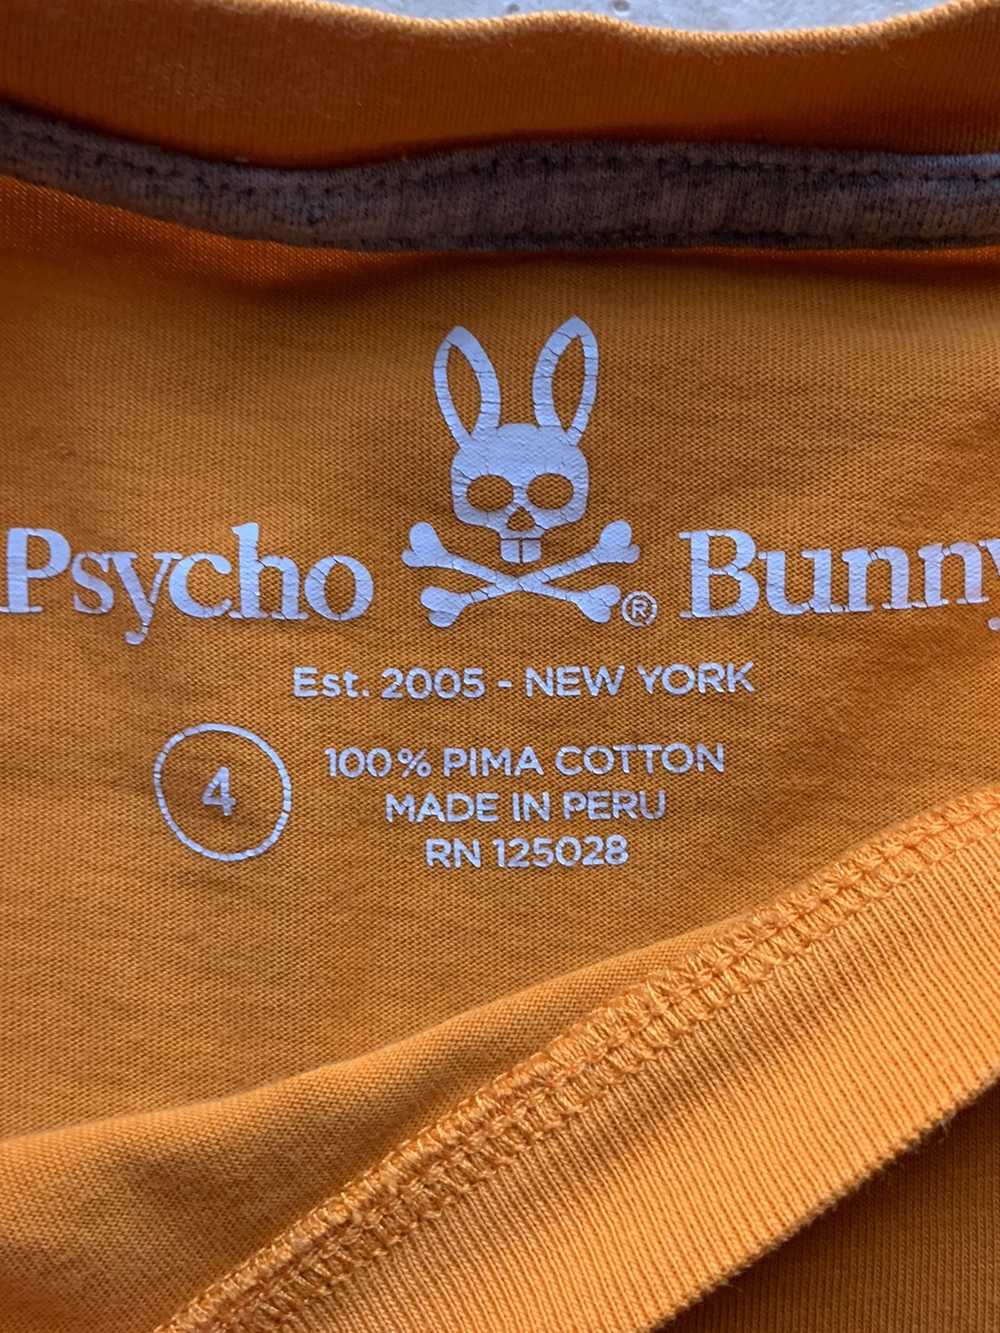 Psycho Bunny Psycho bunny tee - image 4